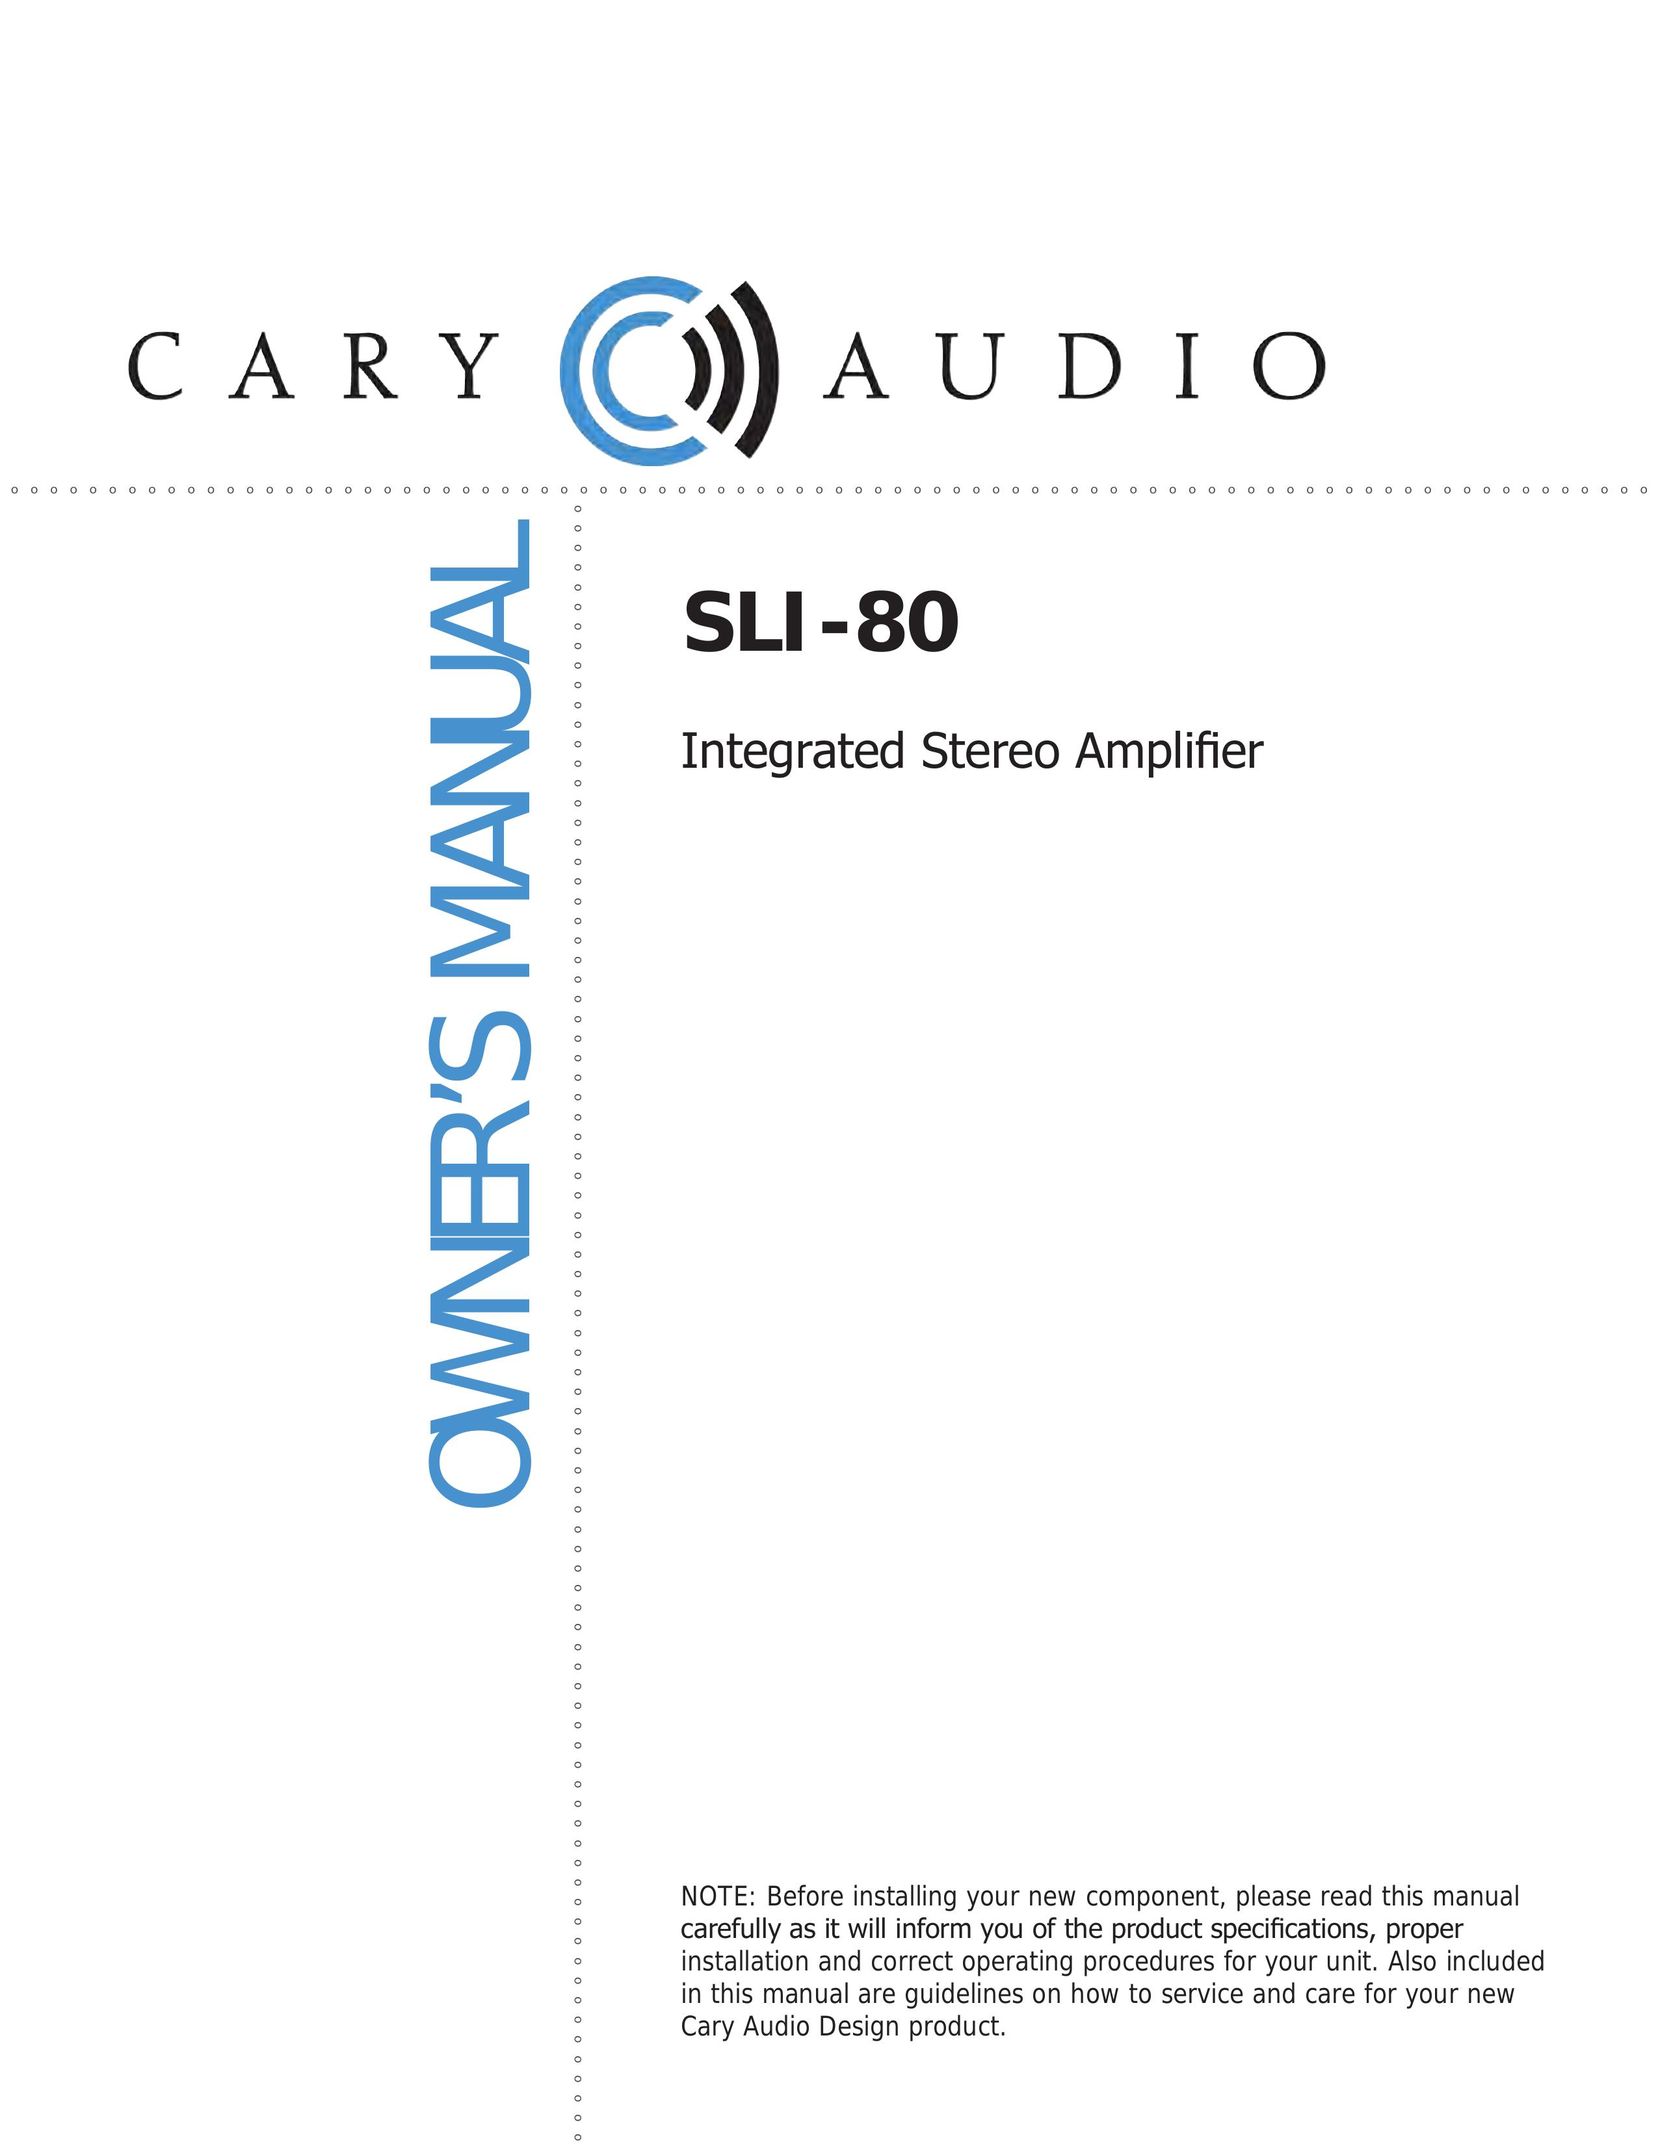 Cary Audio Design SLI-80 Stereo Amplifier User Manual